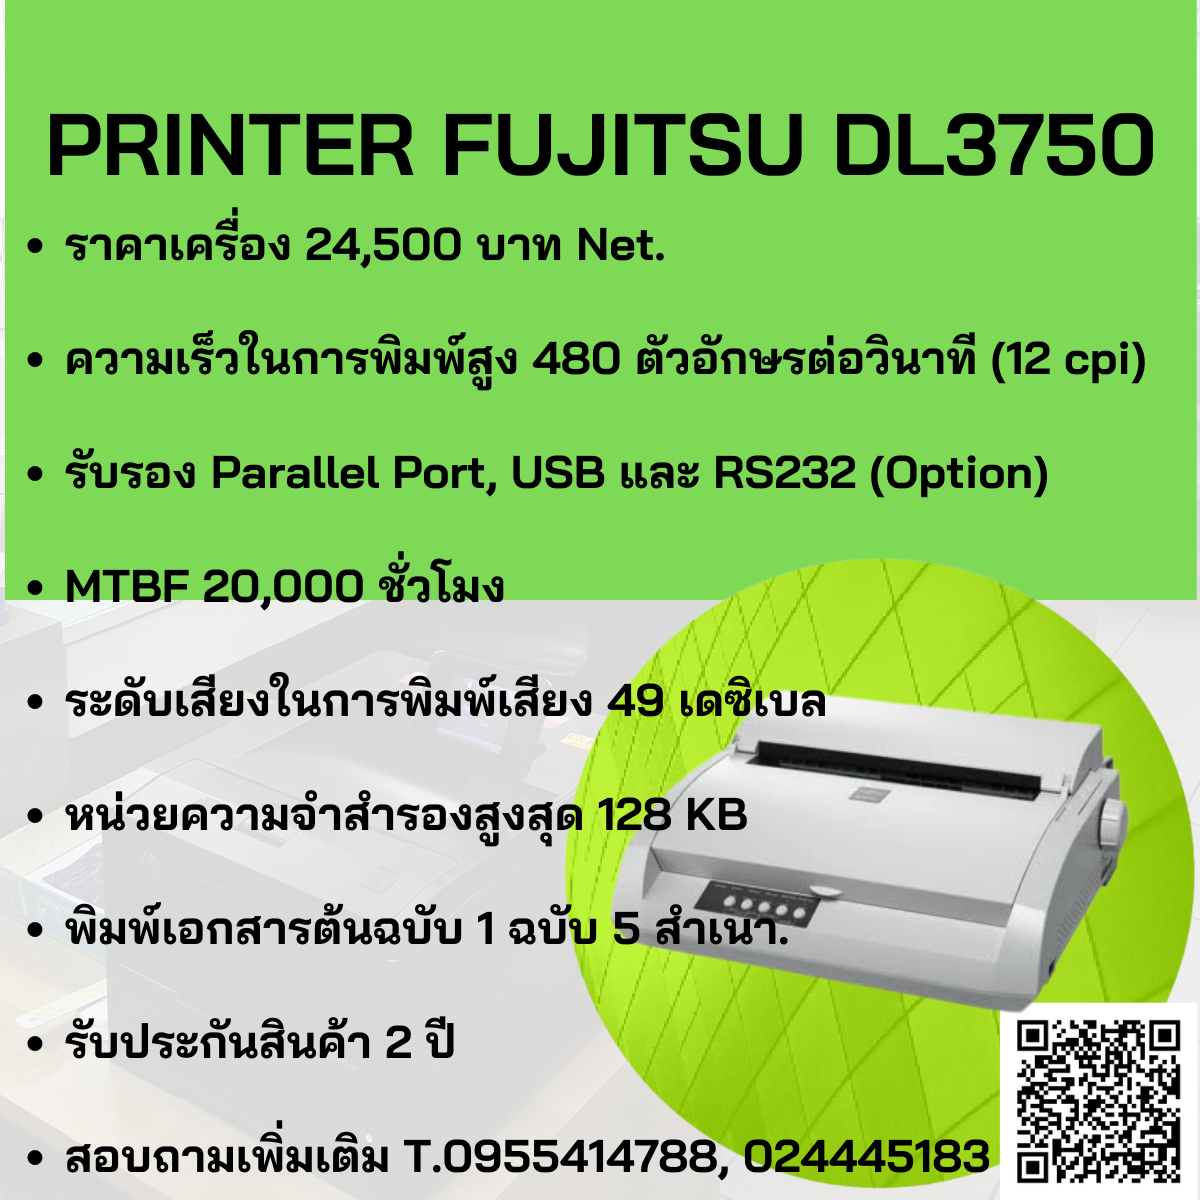 PRINTER FUJITSU DL3750